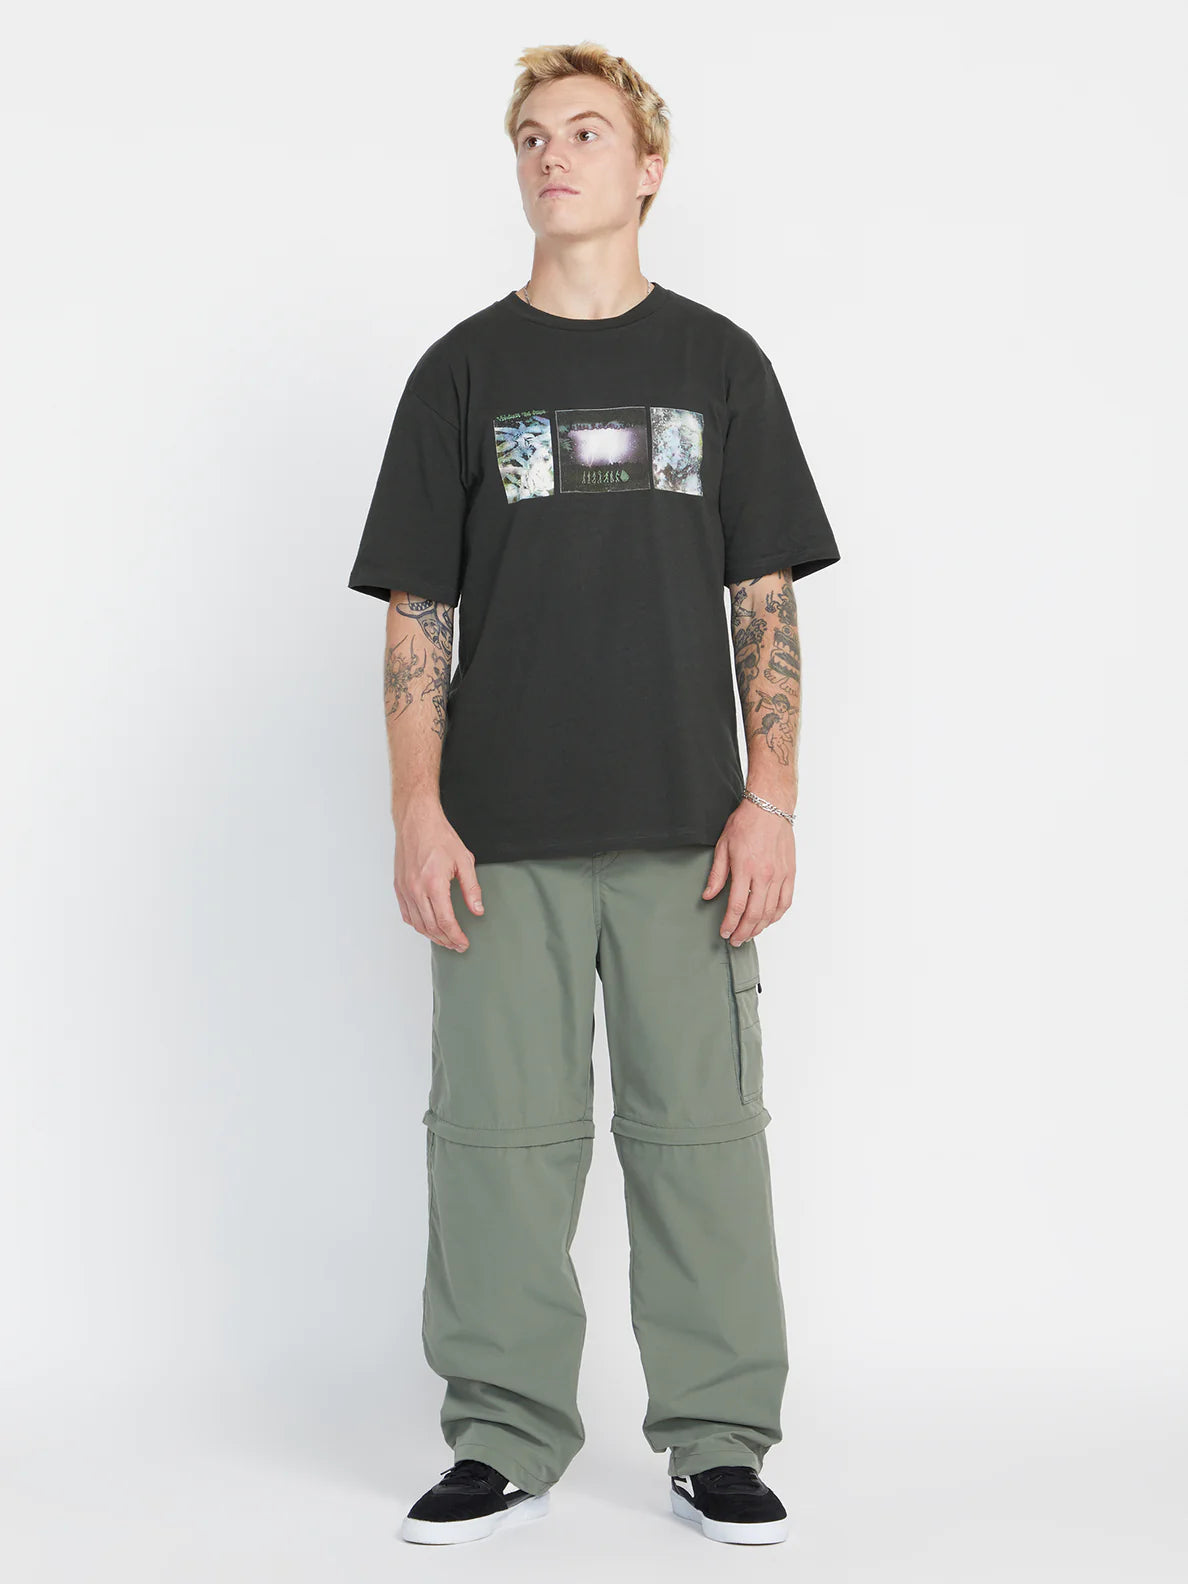 Camiseta Volcom Skate Vitals Simon Bannerot - Stealth